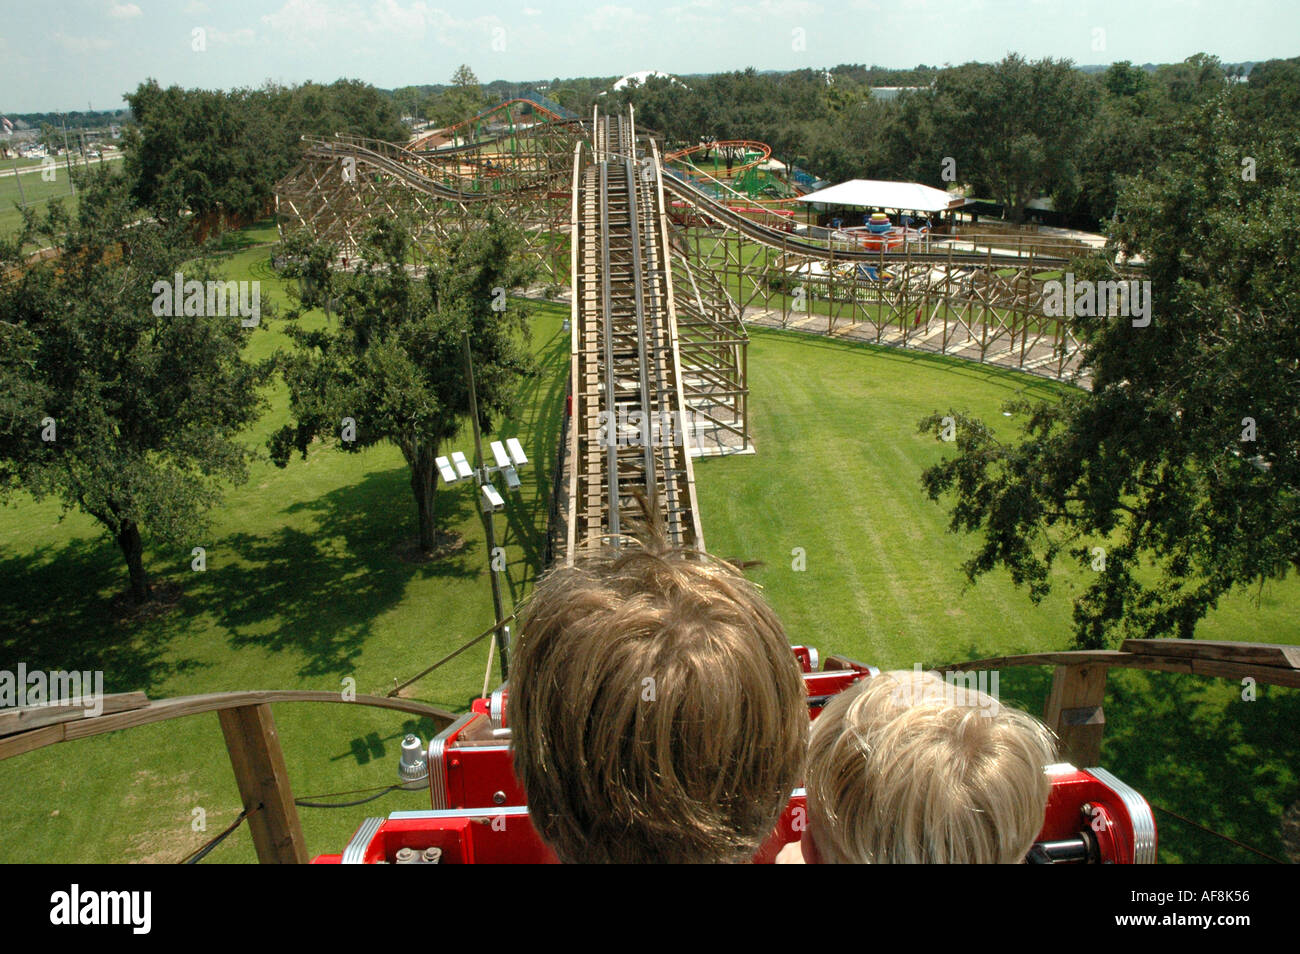 Cypress Gardens Adventure Park Florida Fl Winter Haven Florida attractions Triple Hurricane wooden roller coaster ride Stock Photo